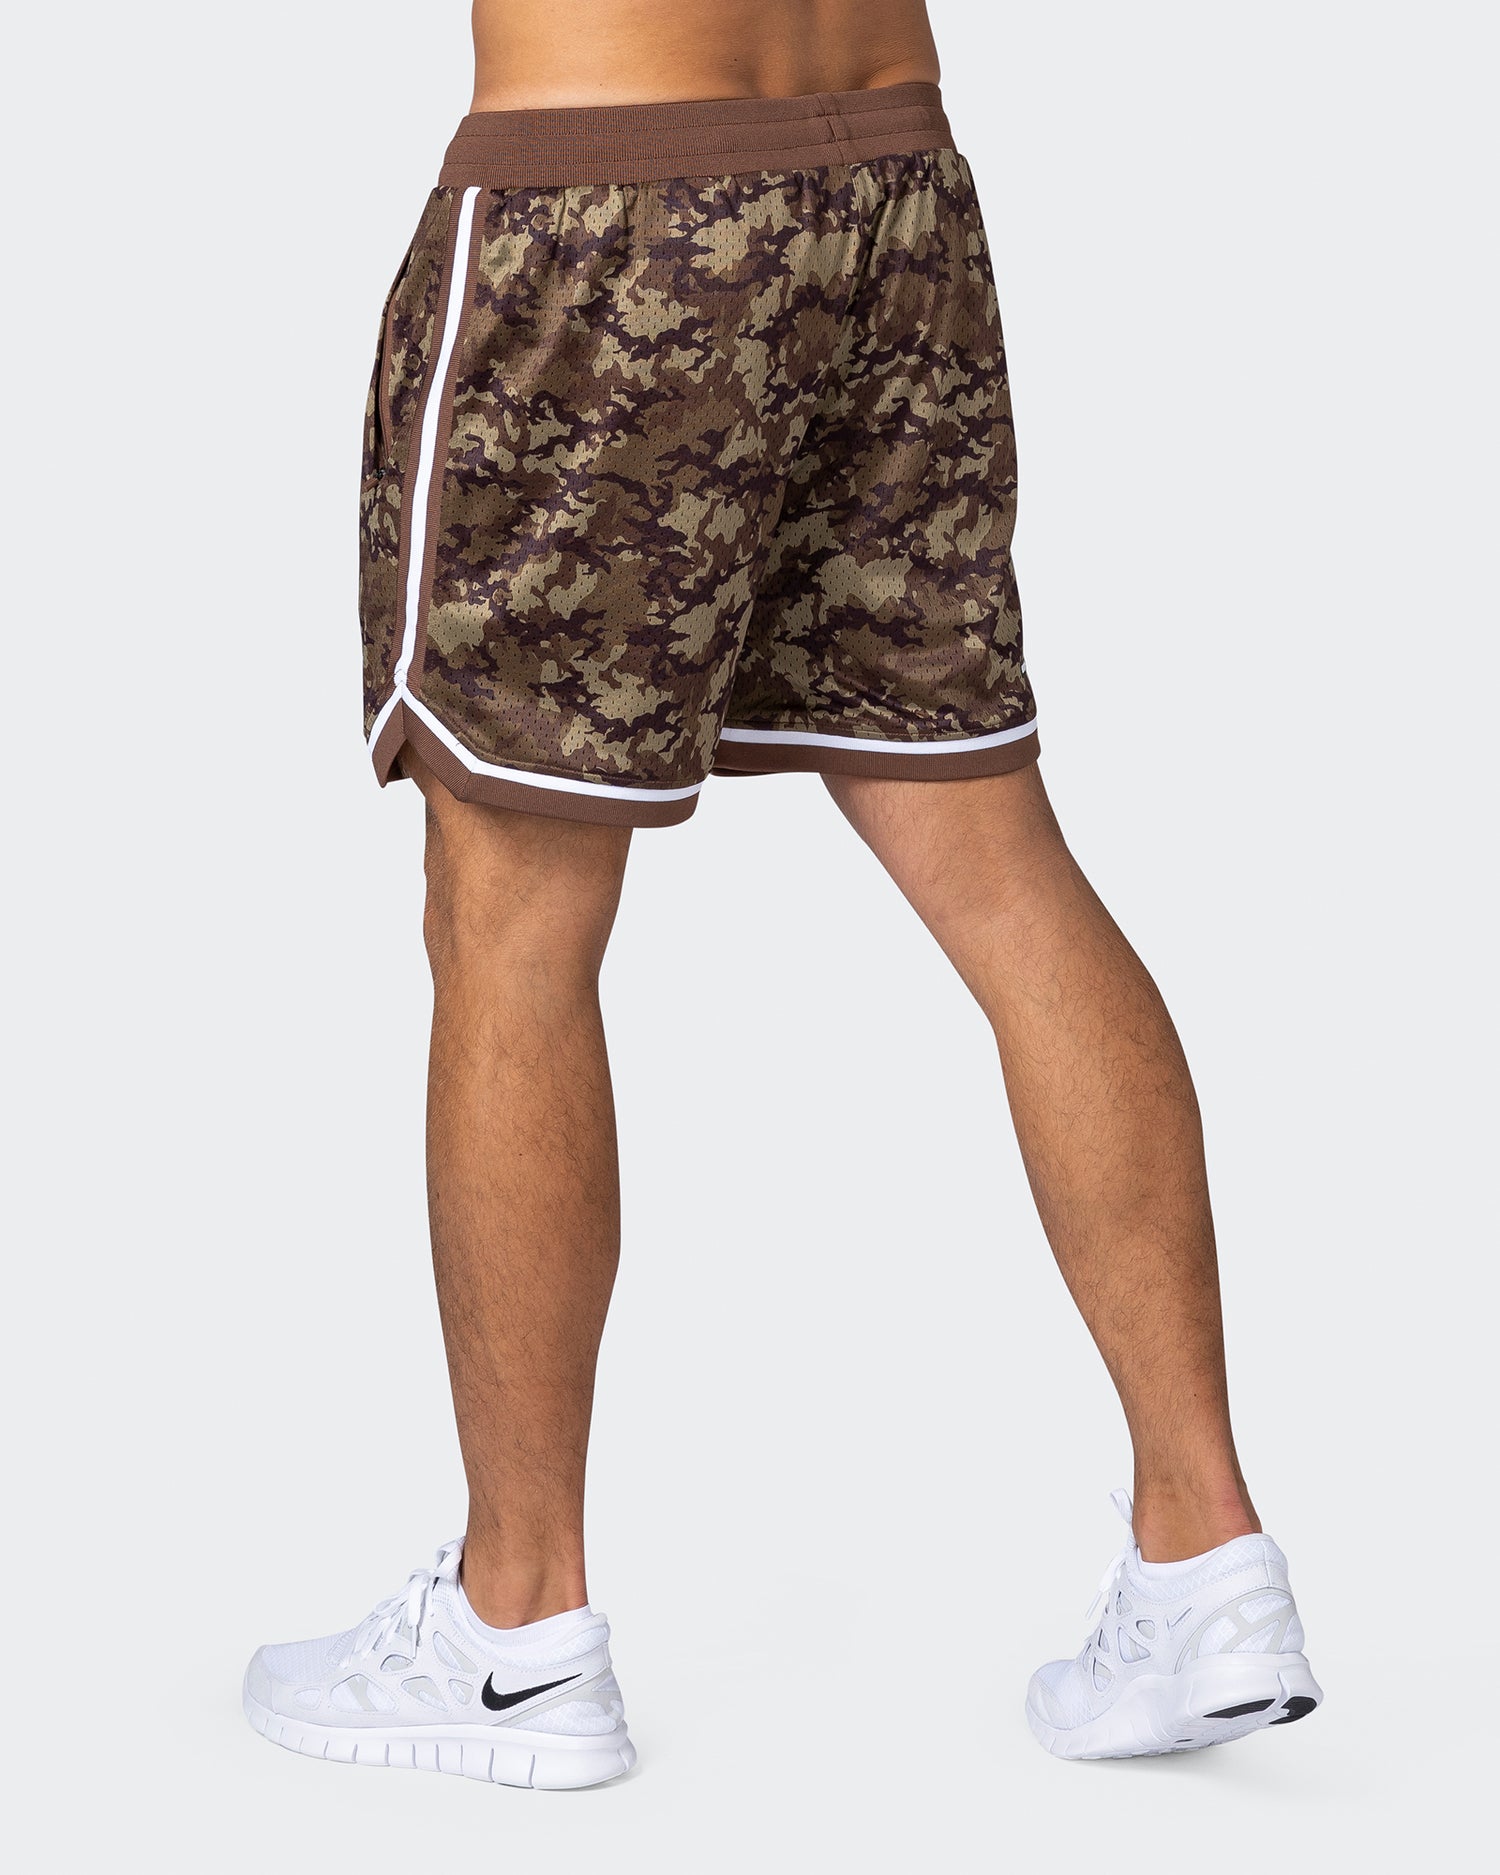 5" Basketball Shorts - Chestnut Camo Print